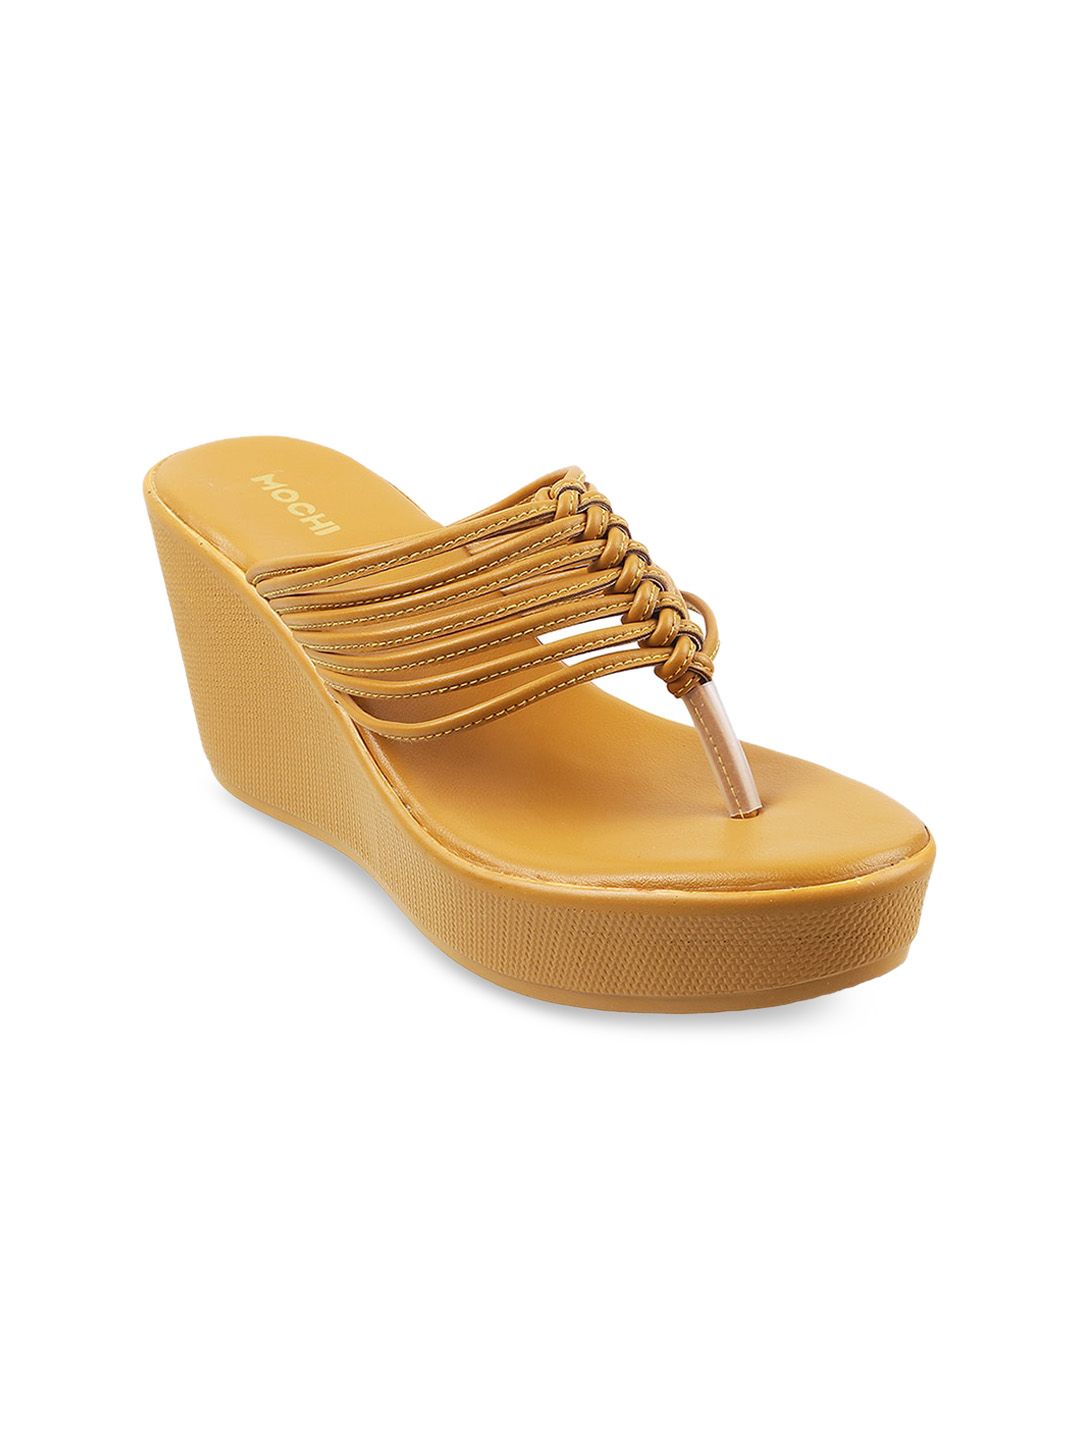 Mochi Yellow Wedge Sandal Heels Price in India